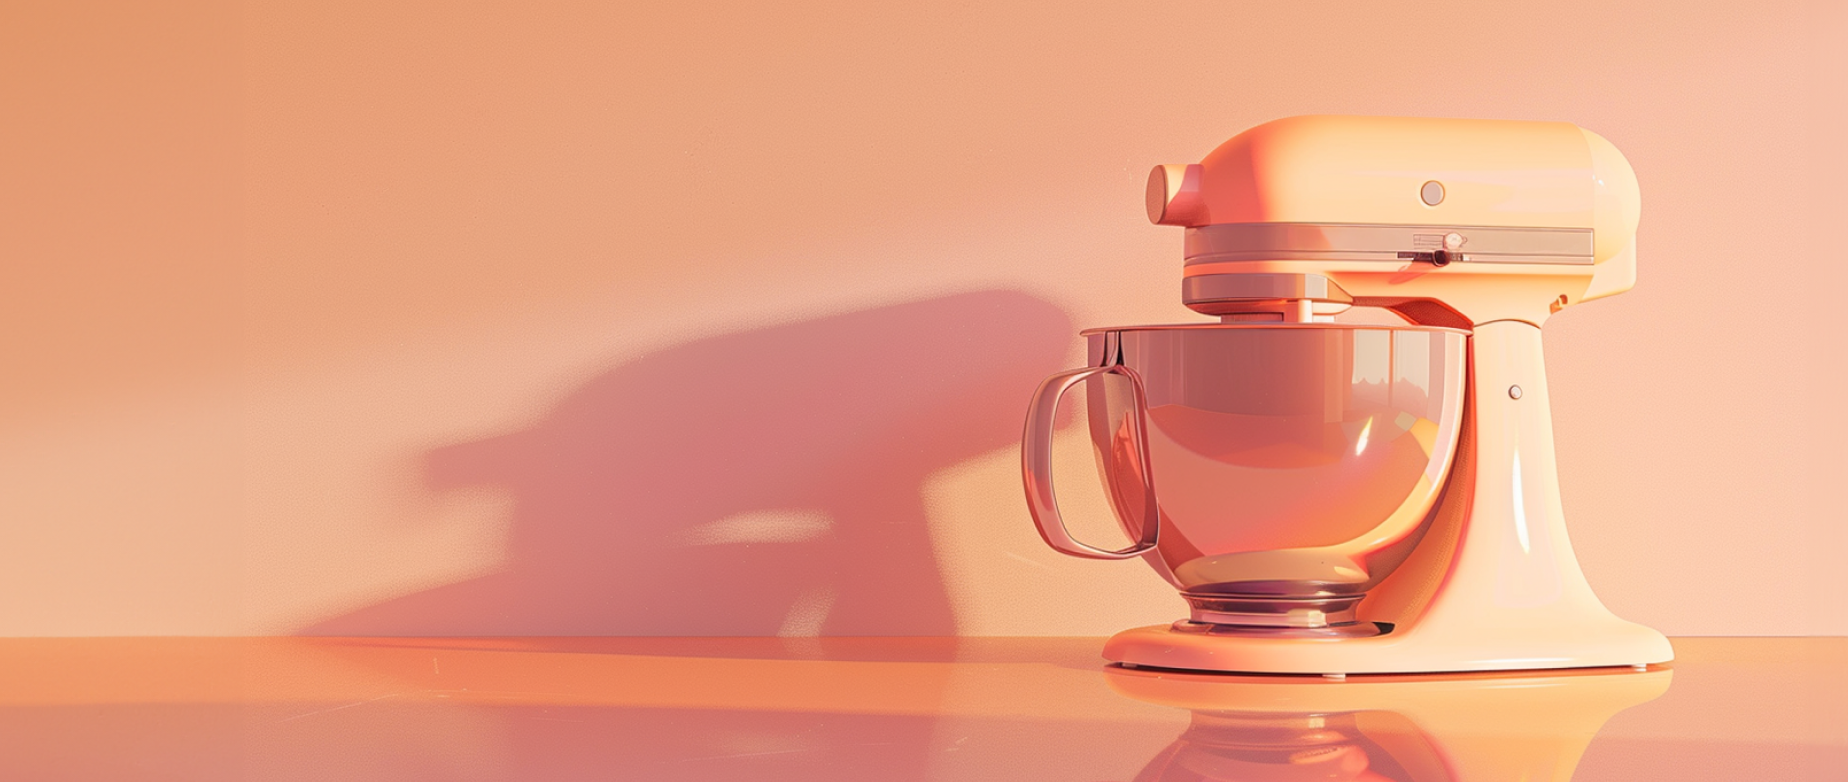 A kitchen mixer on a peach background.